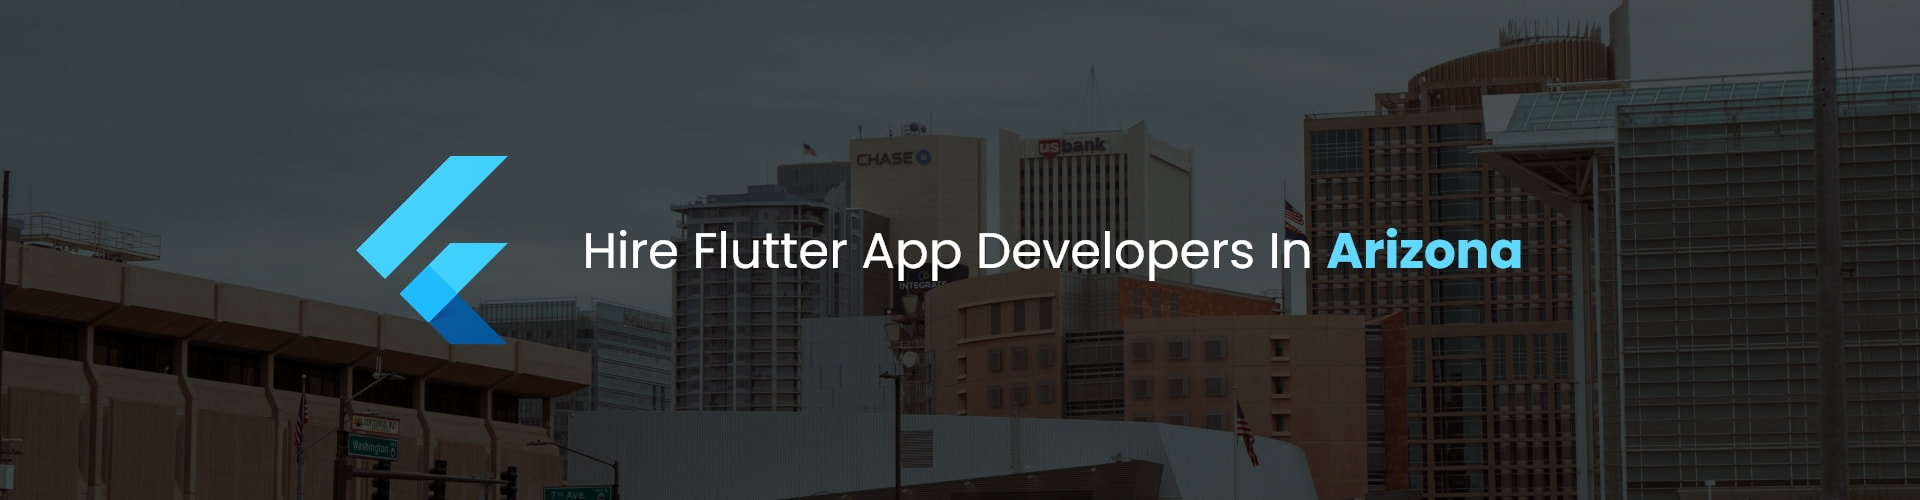 hire flutter app developers in arizona